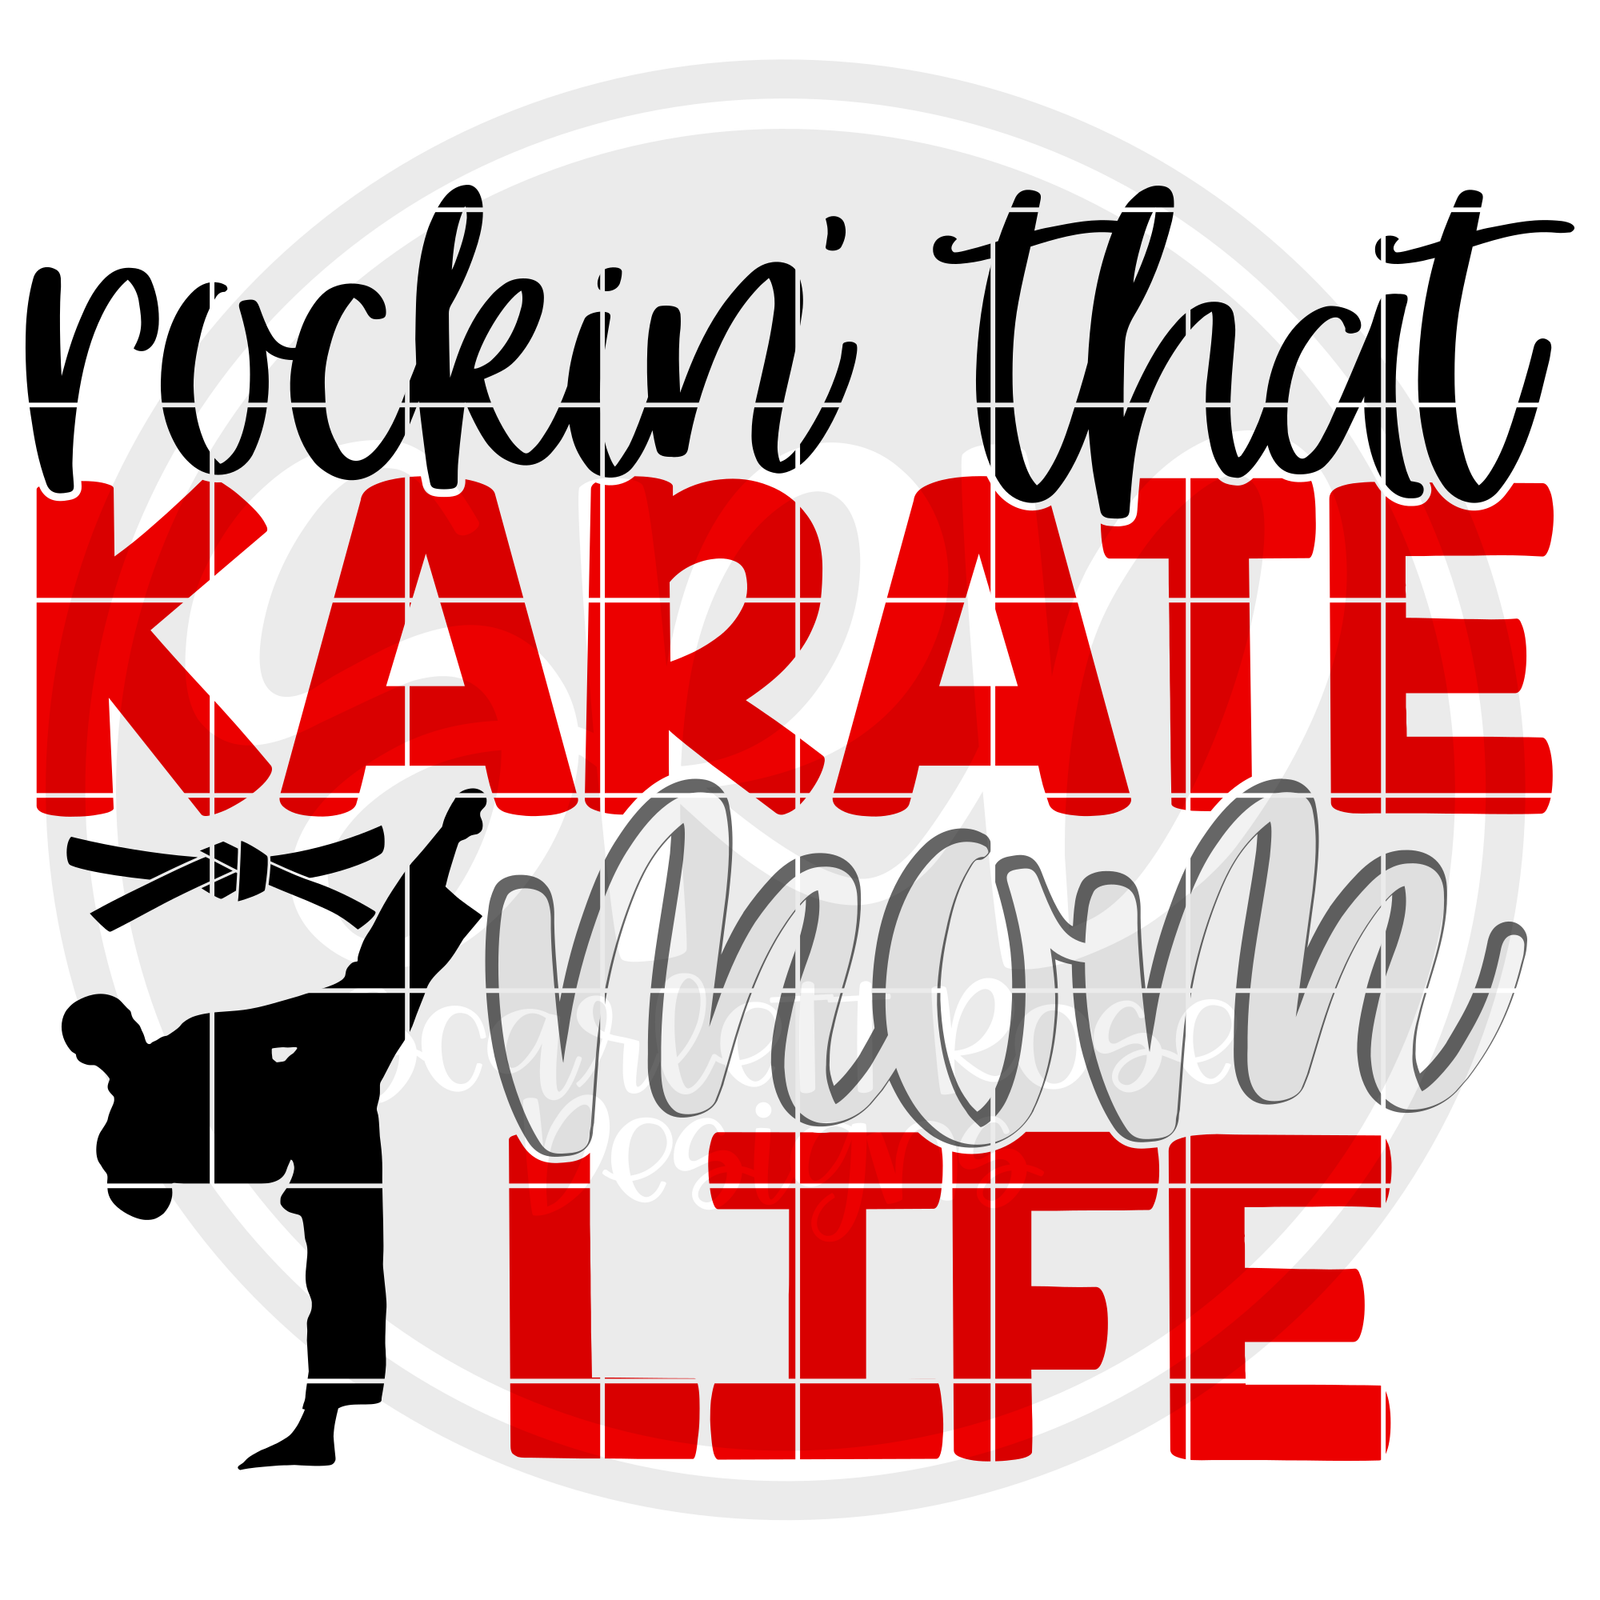 Download Sports SVG, Rockin' that Karate Mom Life SVG cut file - Scarlett Rose Designs